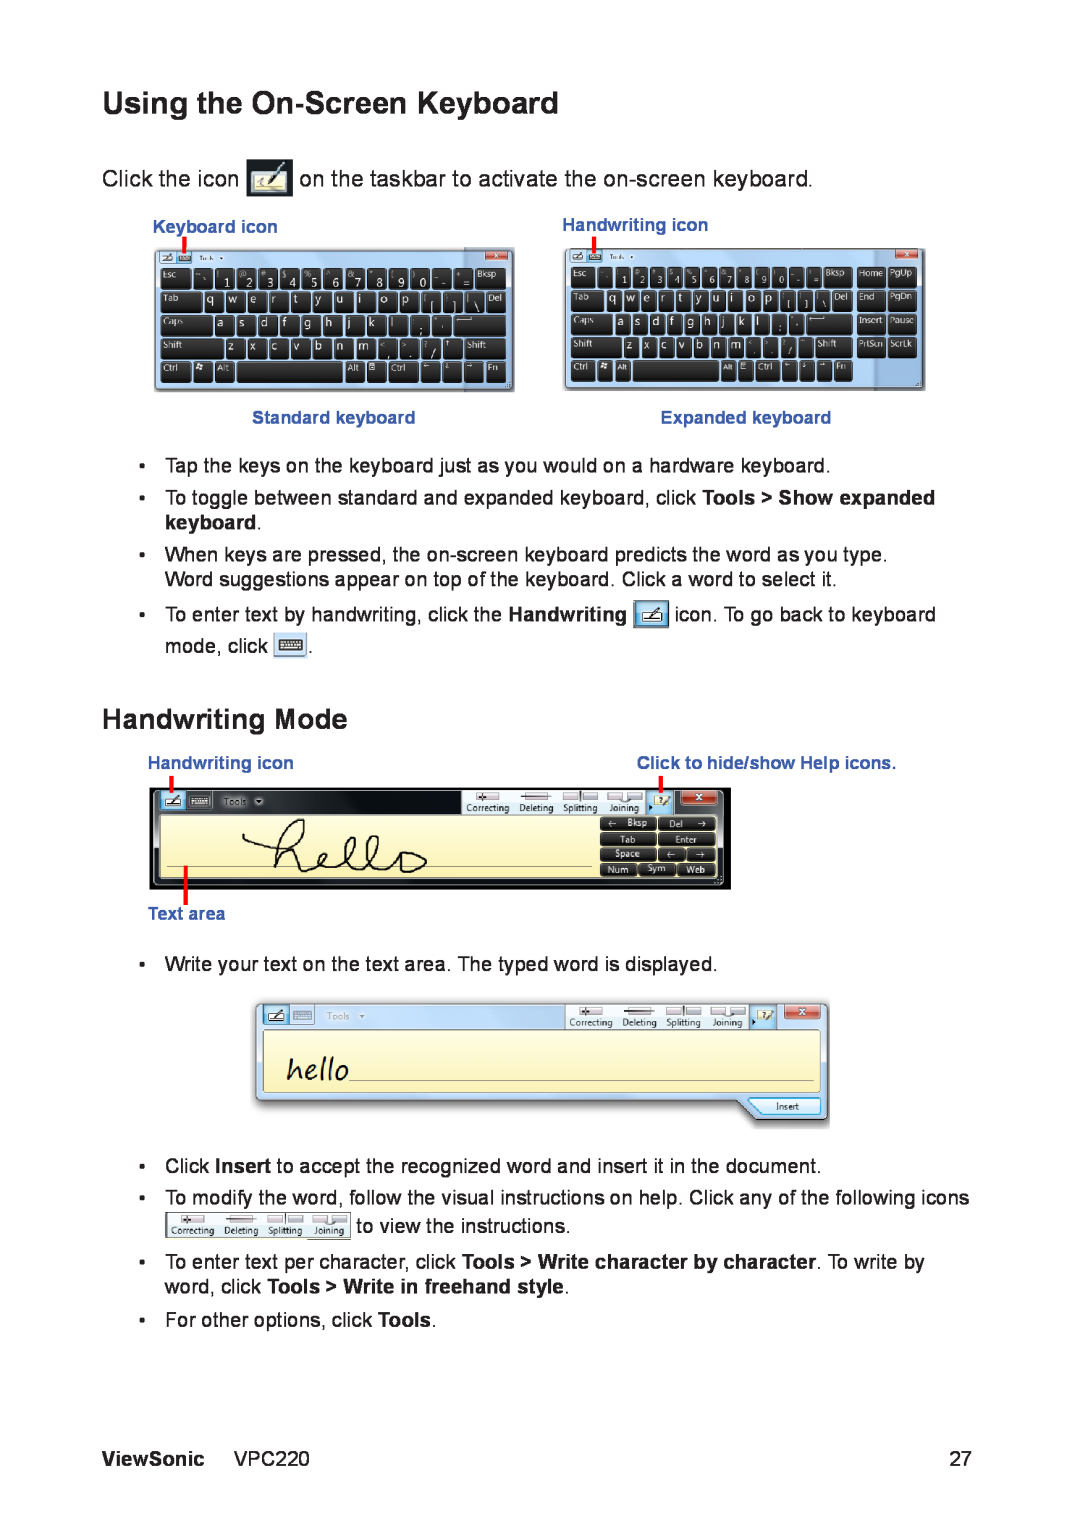 ViewSonic VS13426 manual Using the On-Screen Keyboard, Handwriting Mode, ViewSonic VPC220 